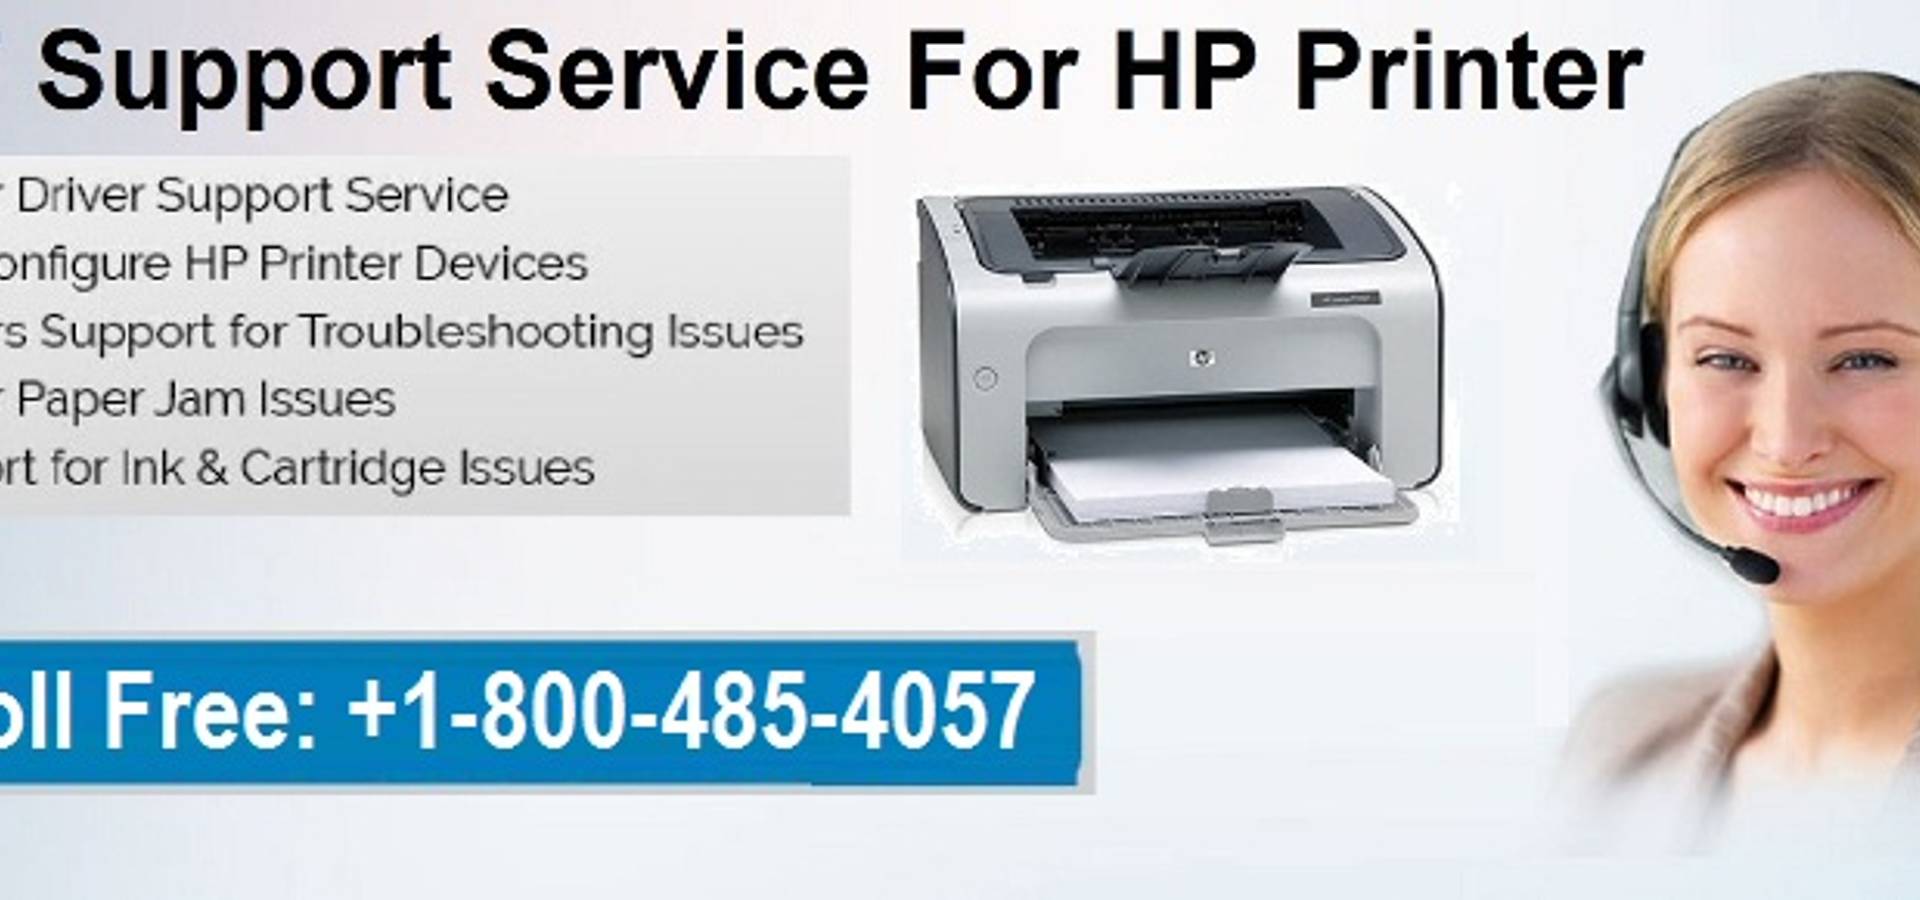 Hp printer support help +1-800-485-4057